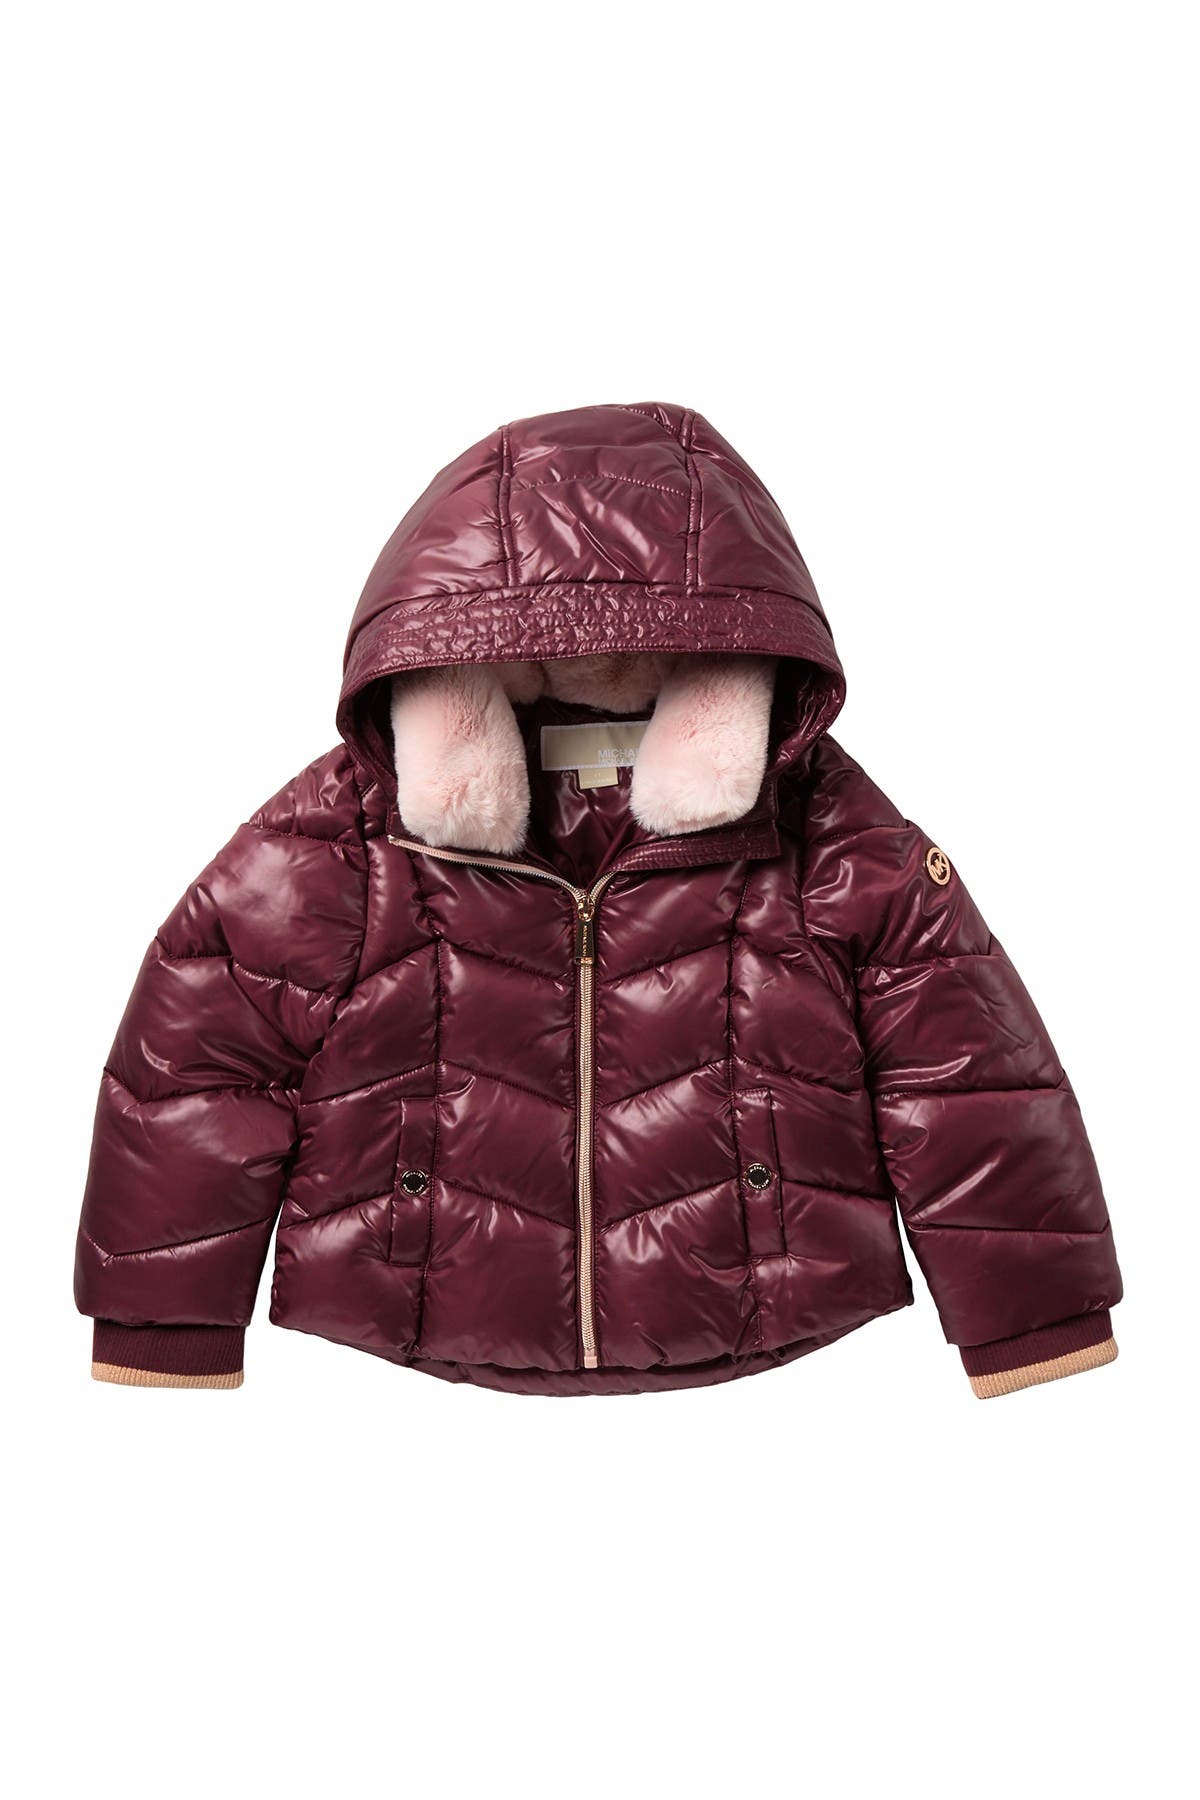 michael kors toddler girl jacket